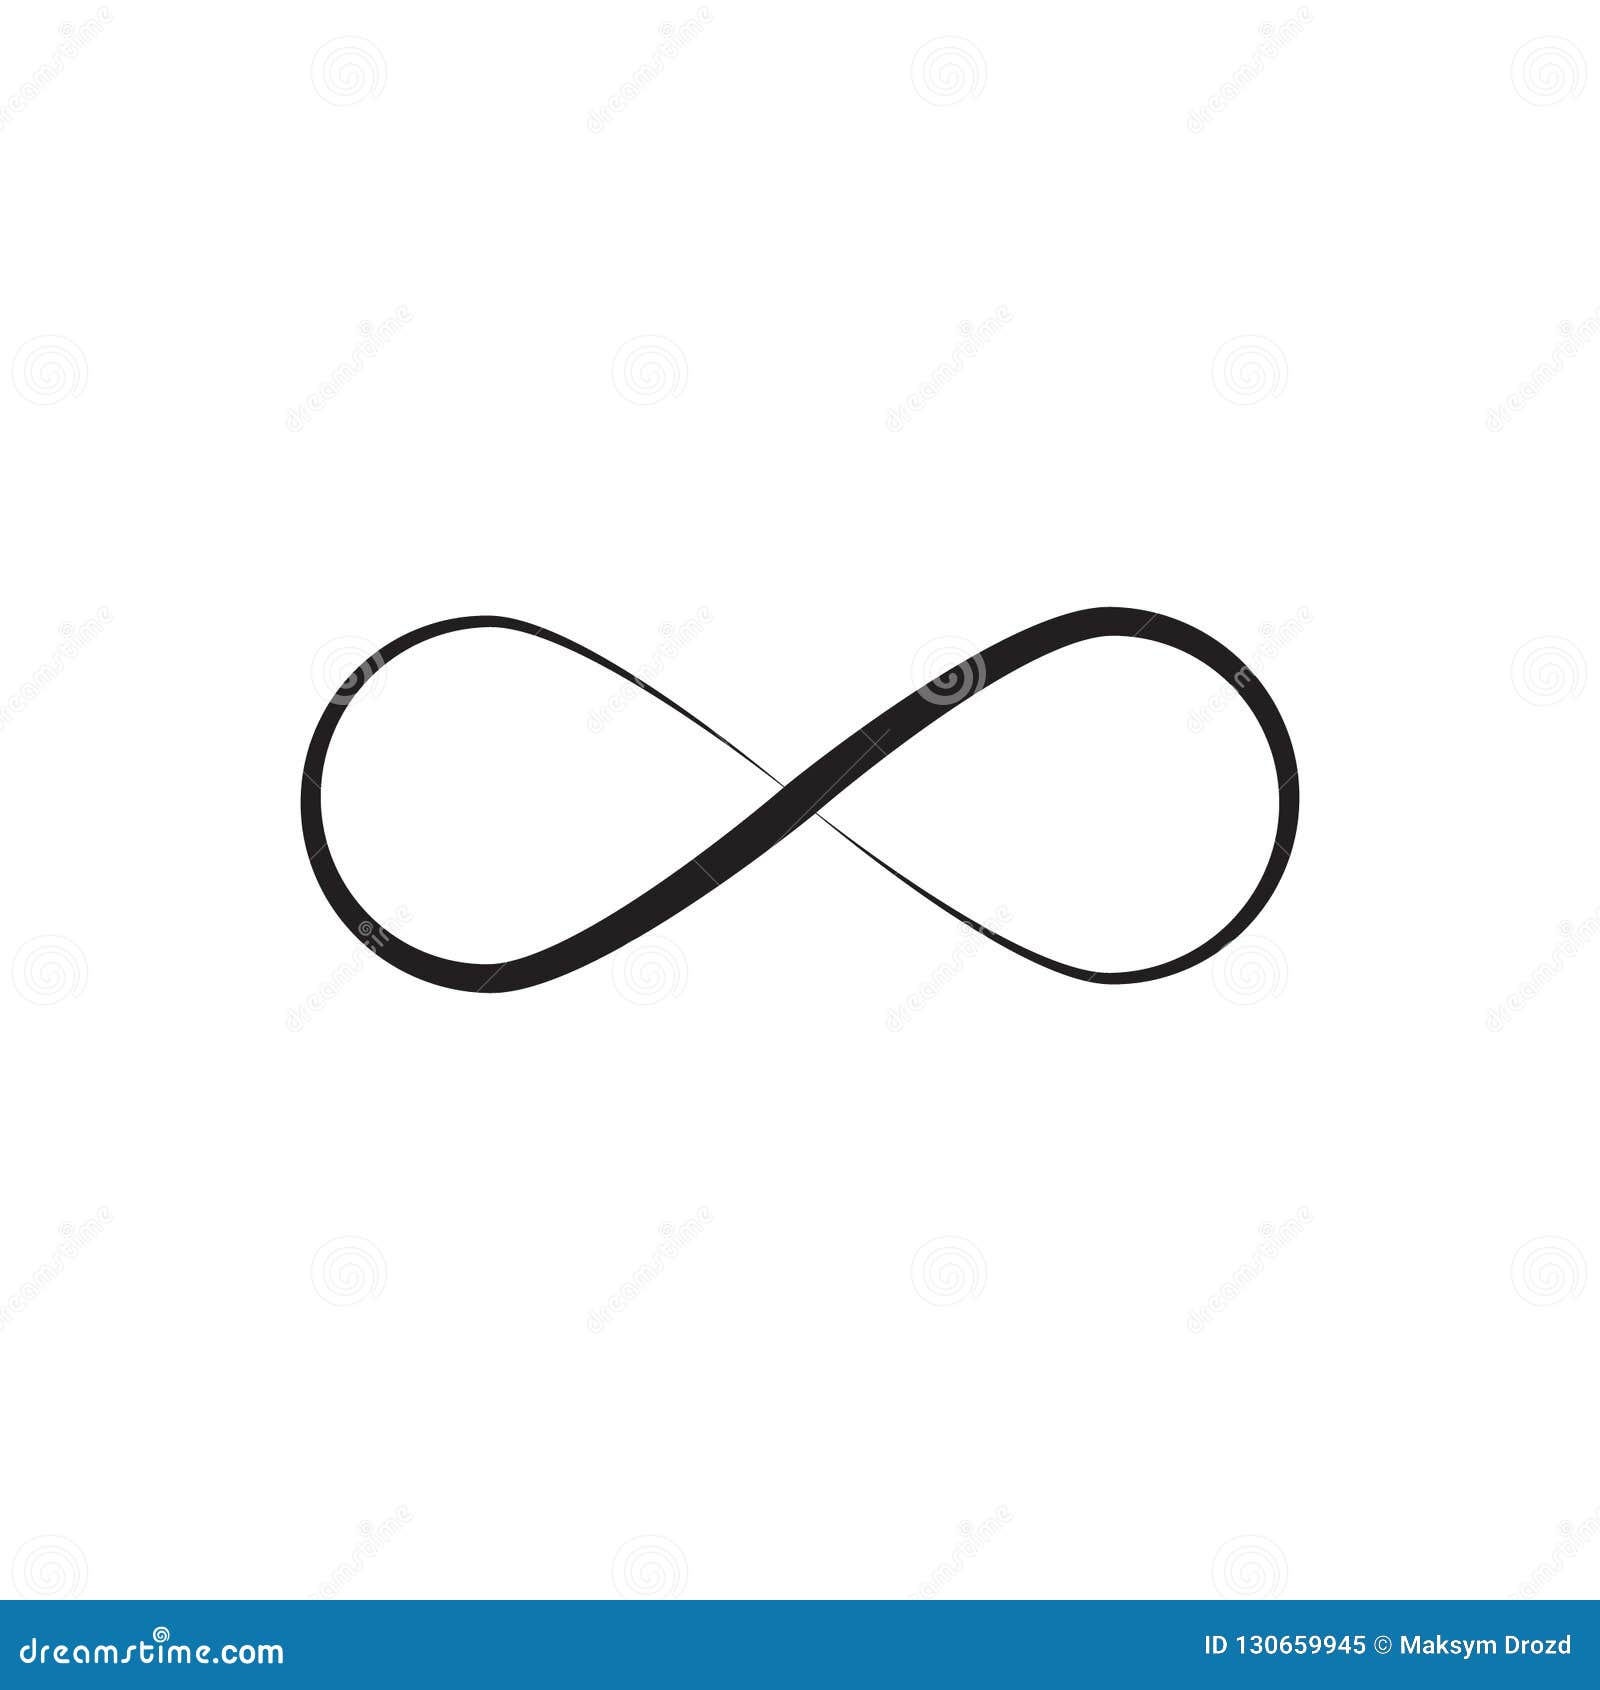 infinity-sign-vector-icon-illustration-white-background-130659945.jpg